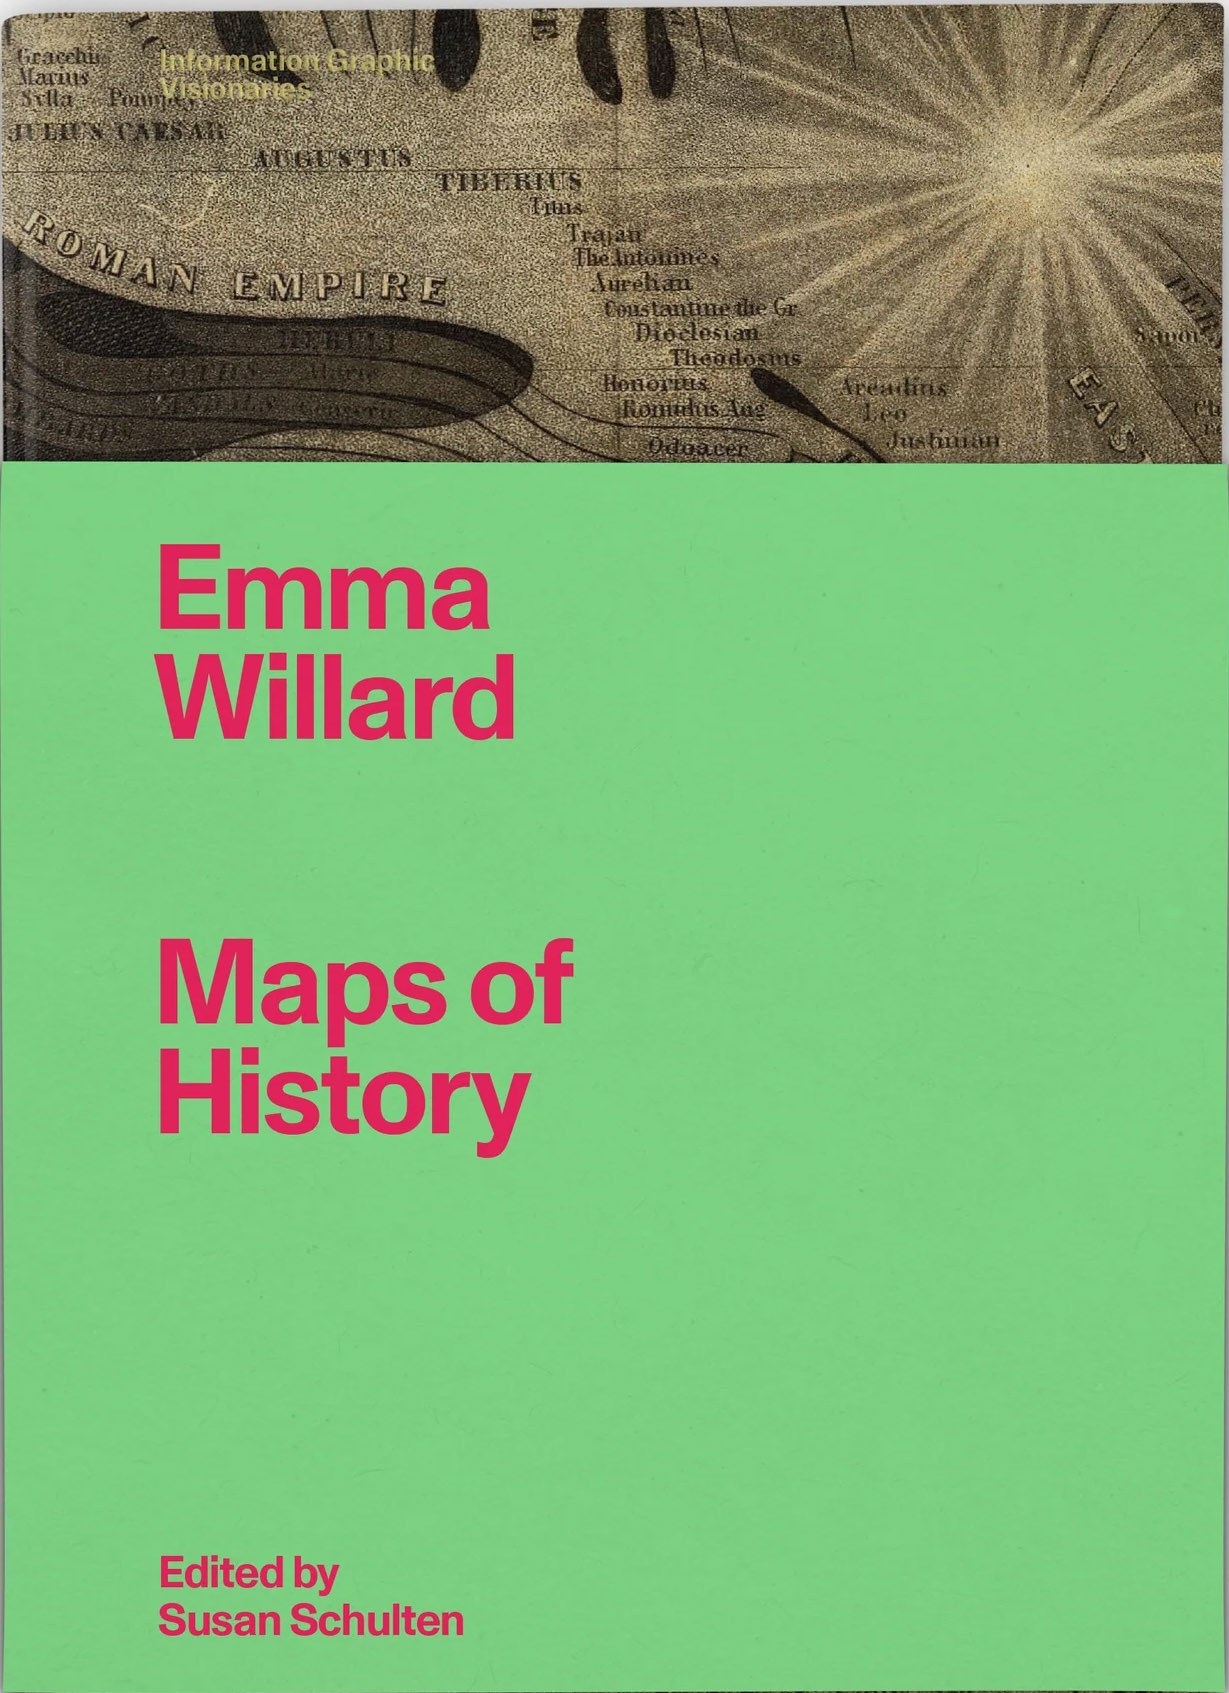 Emma Willard: Maps of History